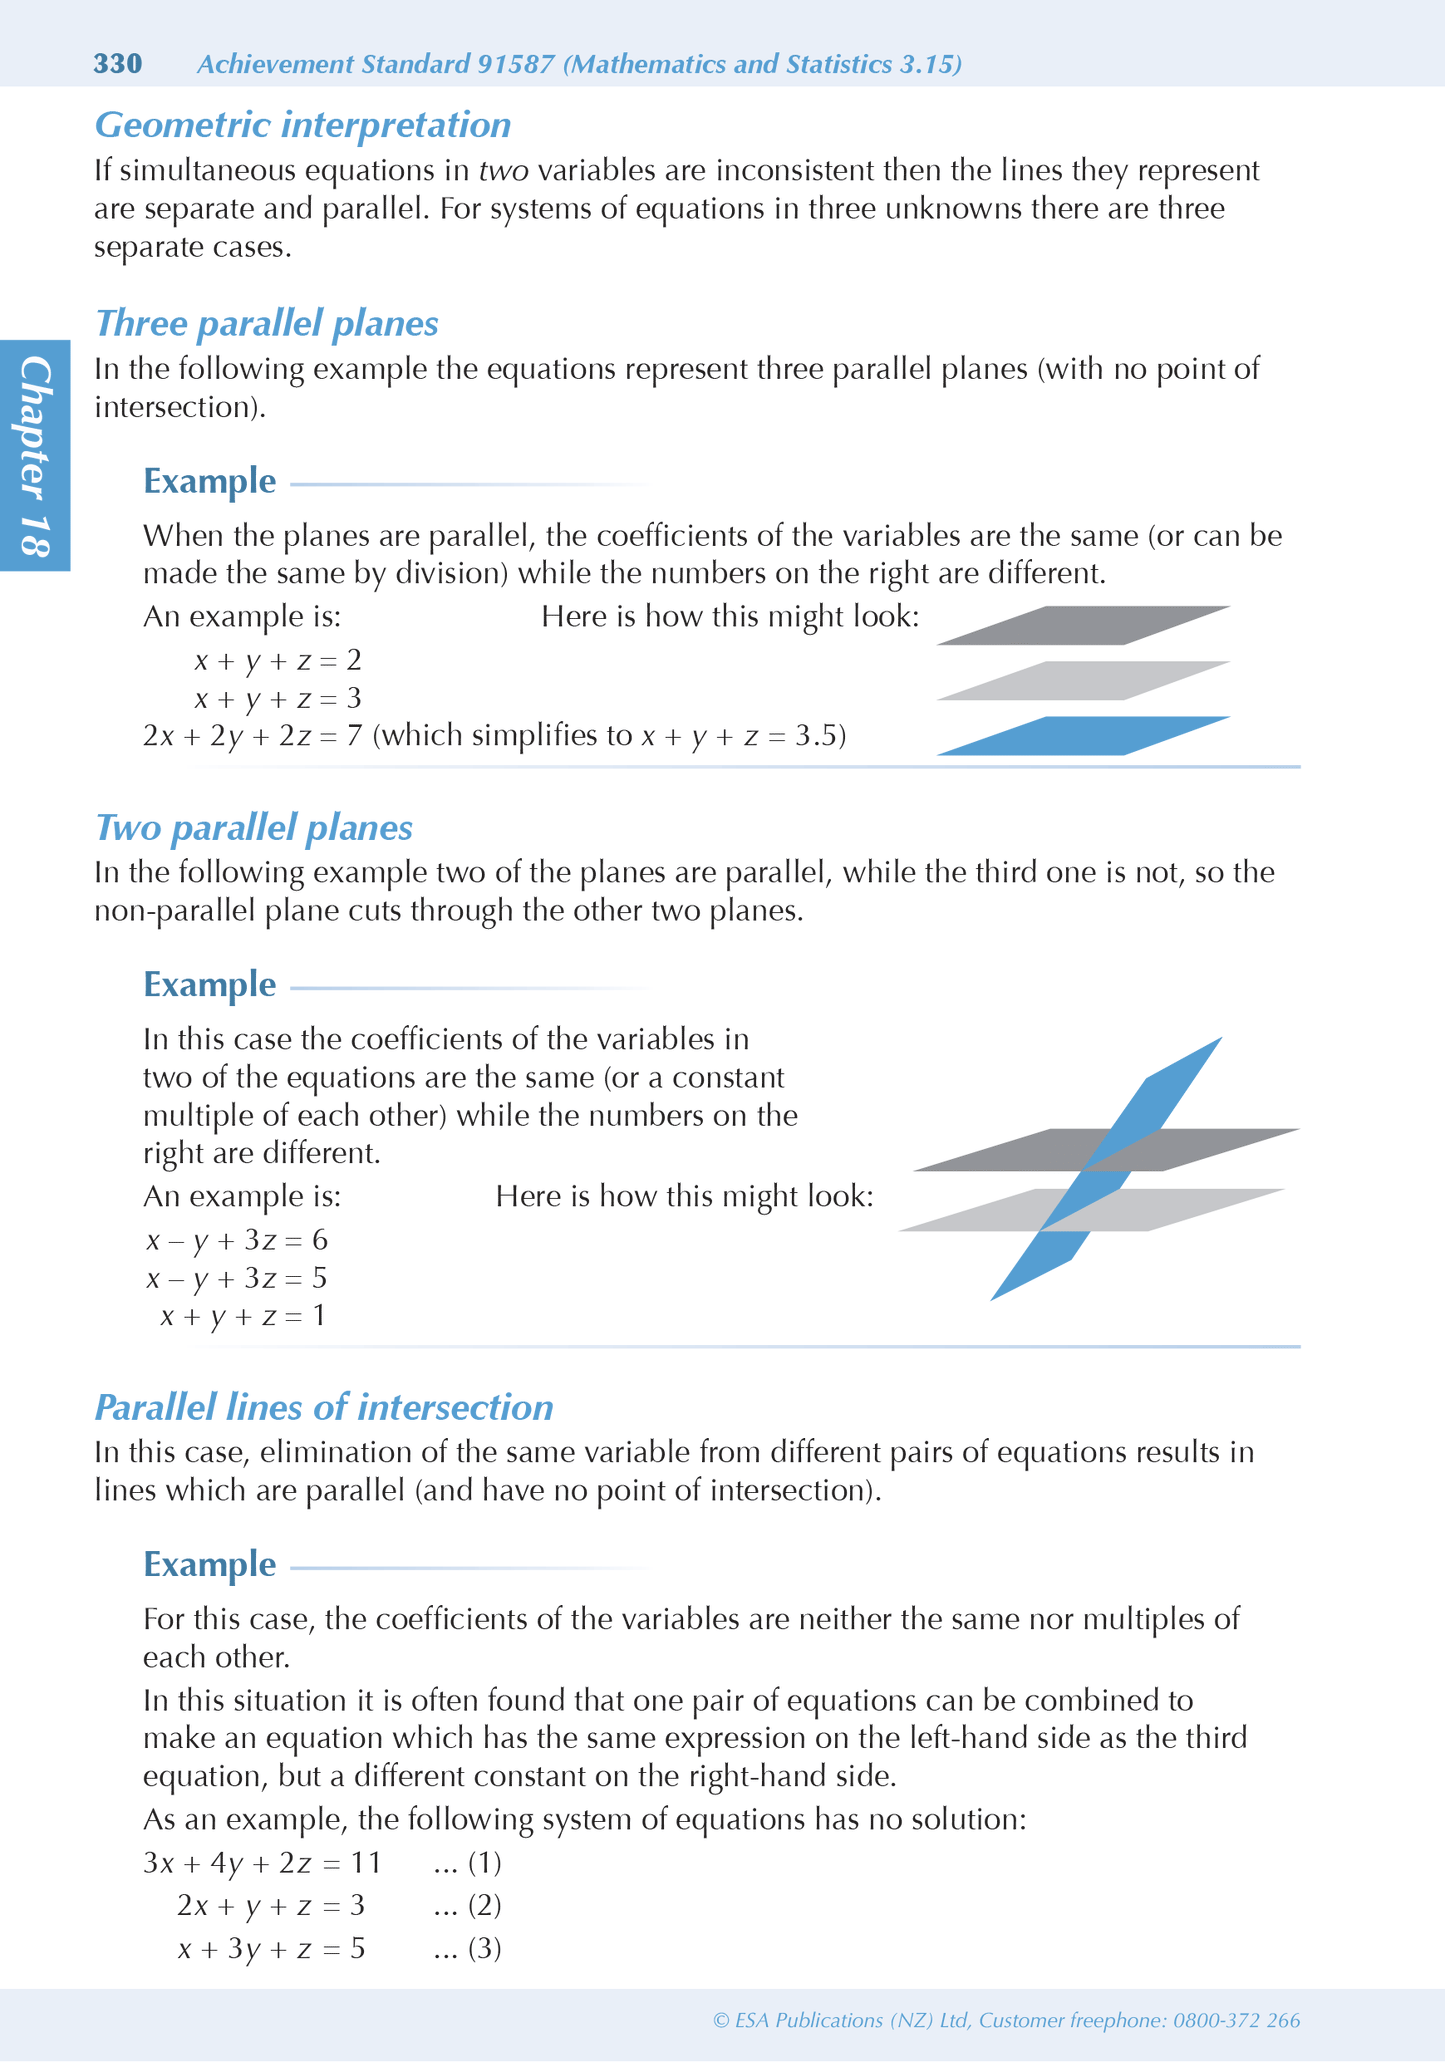 Level 3 Calculus ESA Study Guide